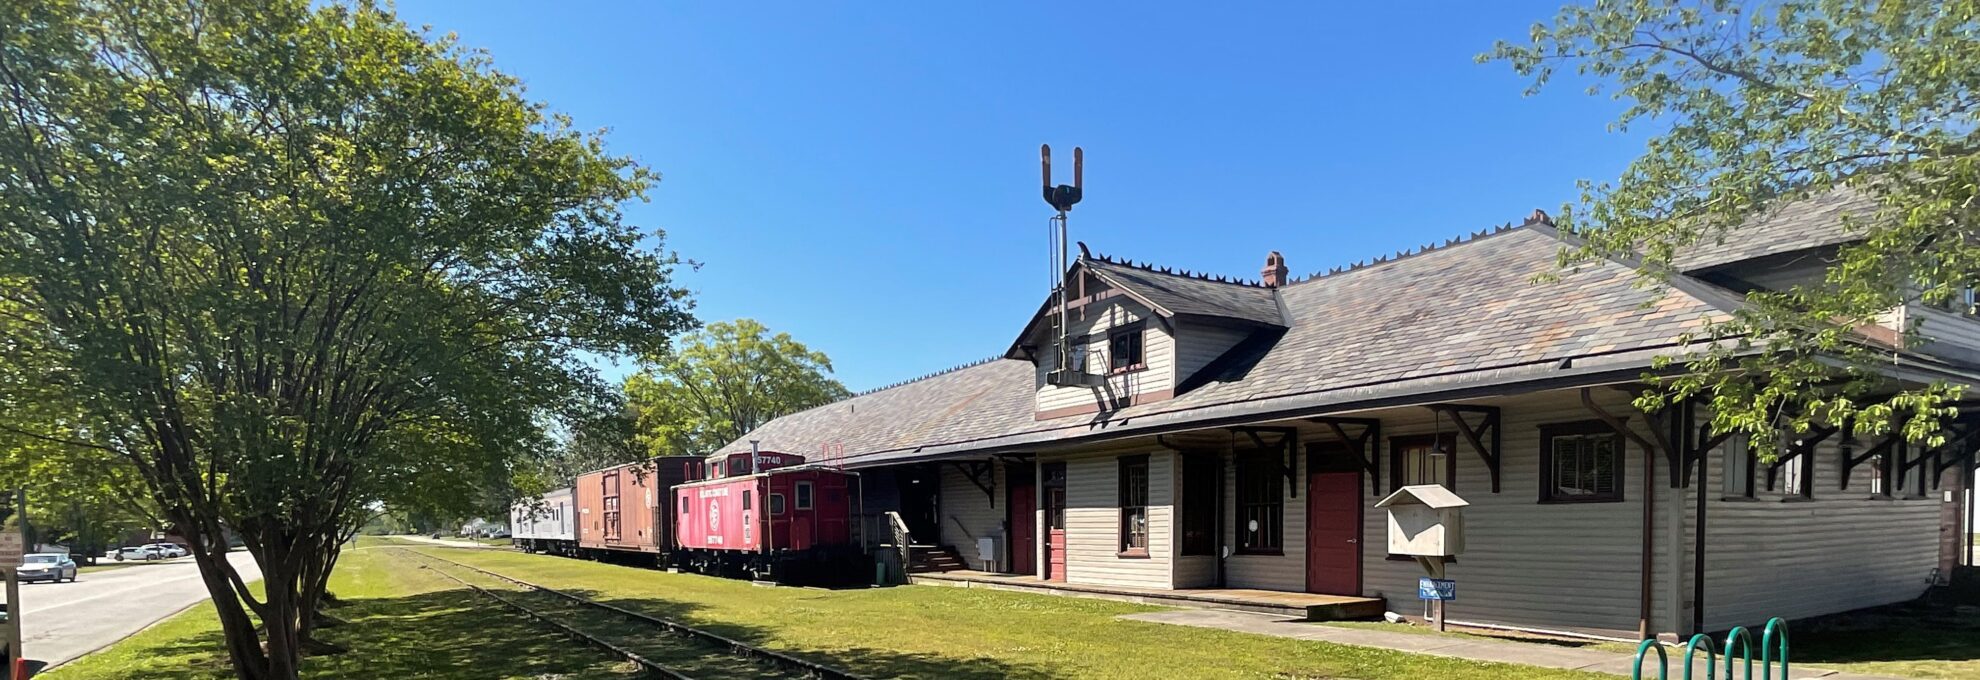 Wallace Train Depot (1)